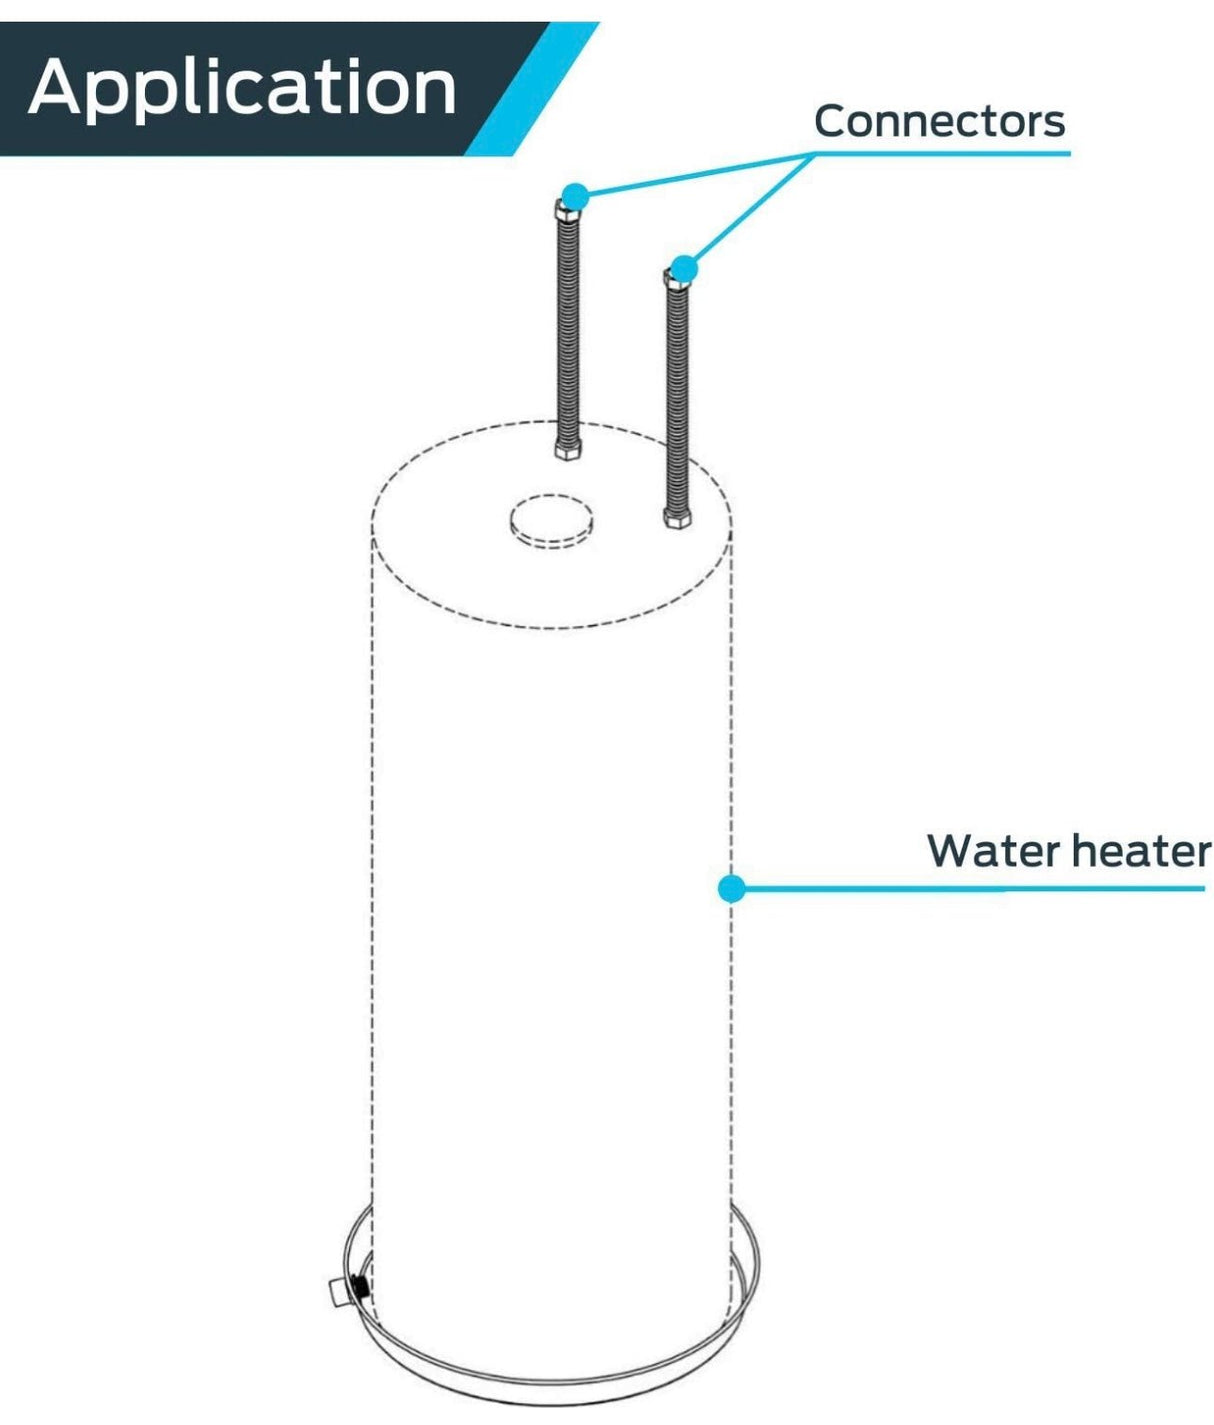 HoldRite QuickFlex 1-1/4 Inch FIP x 1-1/4 Inch FIP x 18 Inch Water Heater Connector